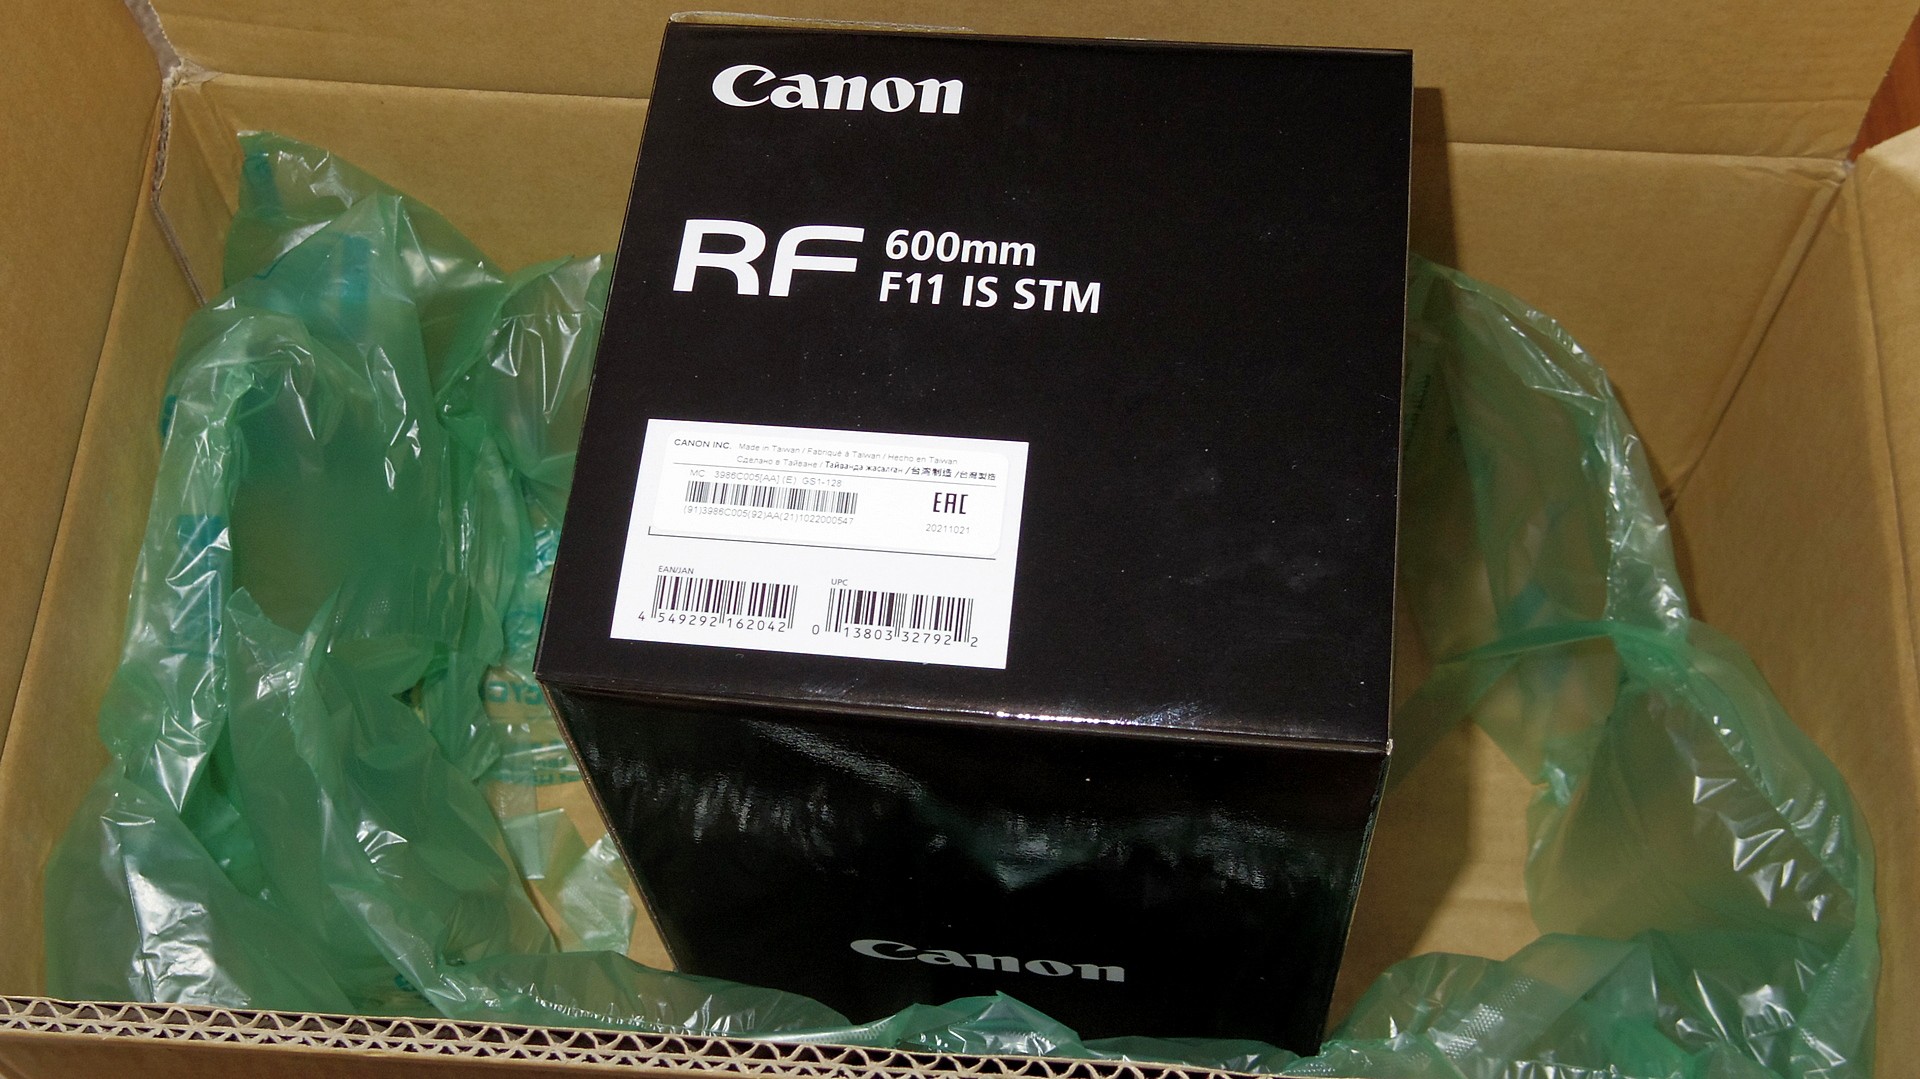 Canon RF 600mm in box.2JPG.JPG